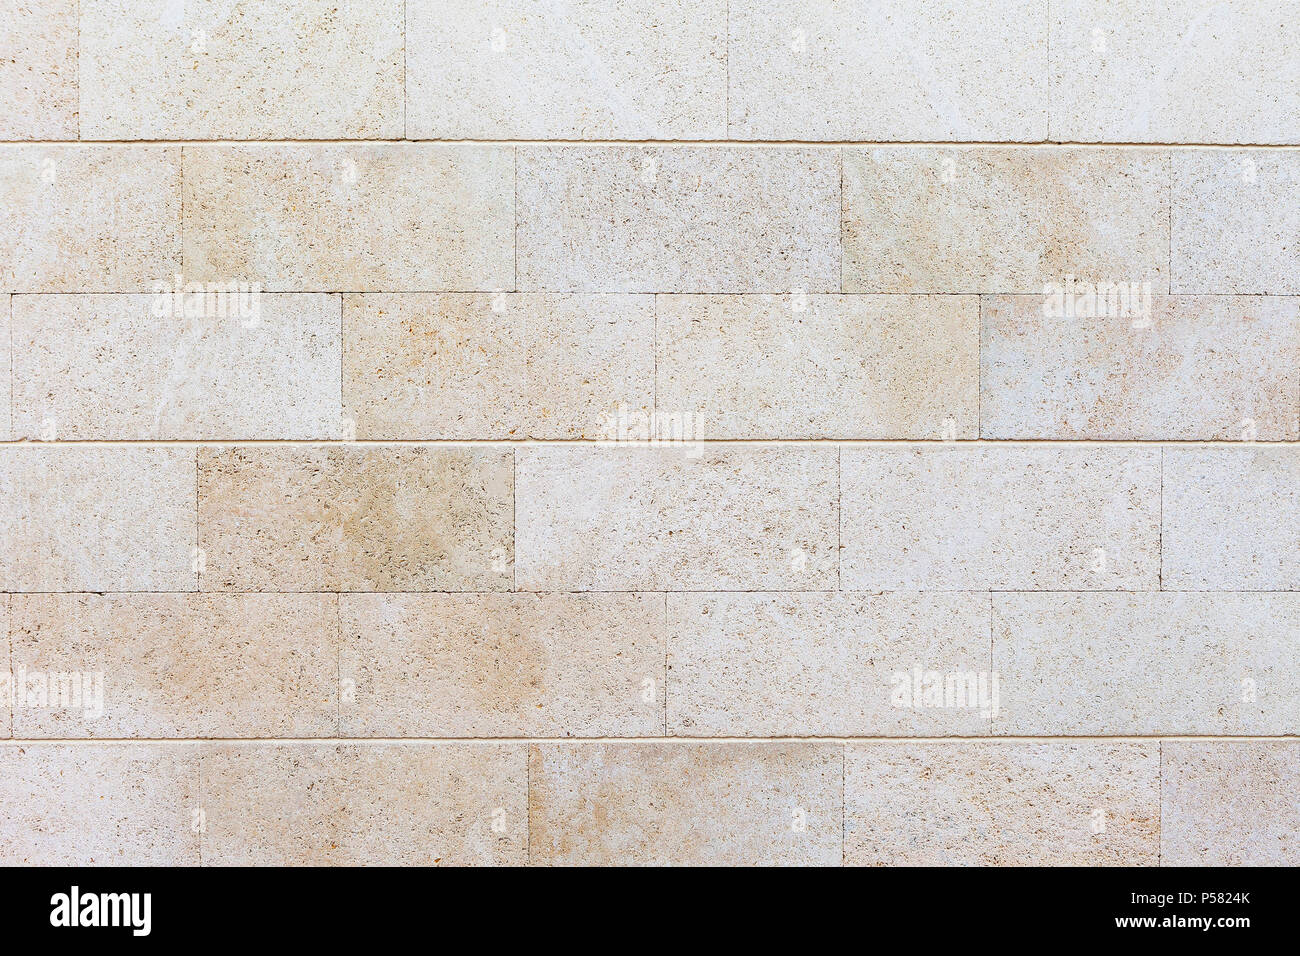 Texture di pietra bianca. Accurate di muratura in pietra arenaria bianca. Un muro di mattoni. Foto Stock